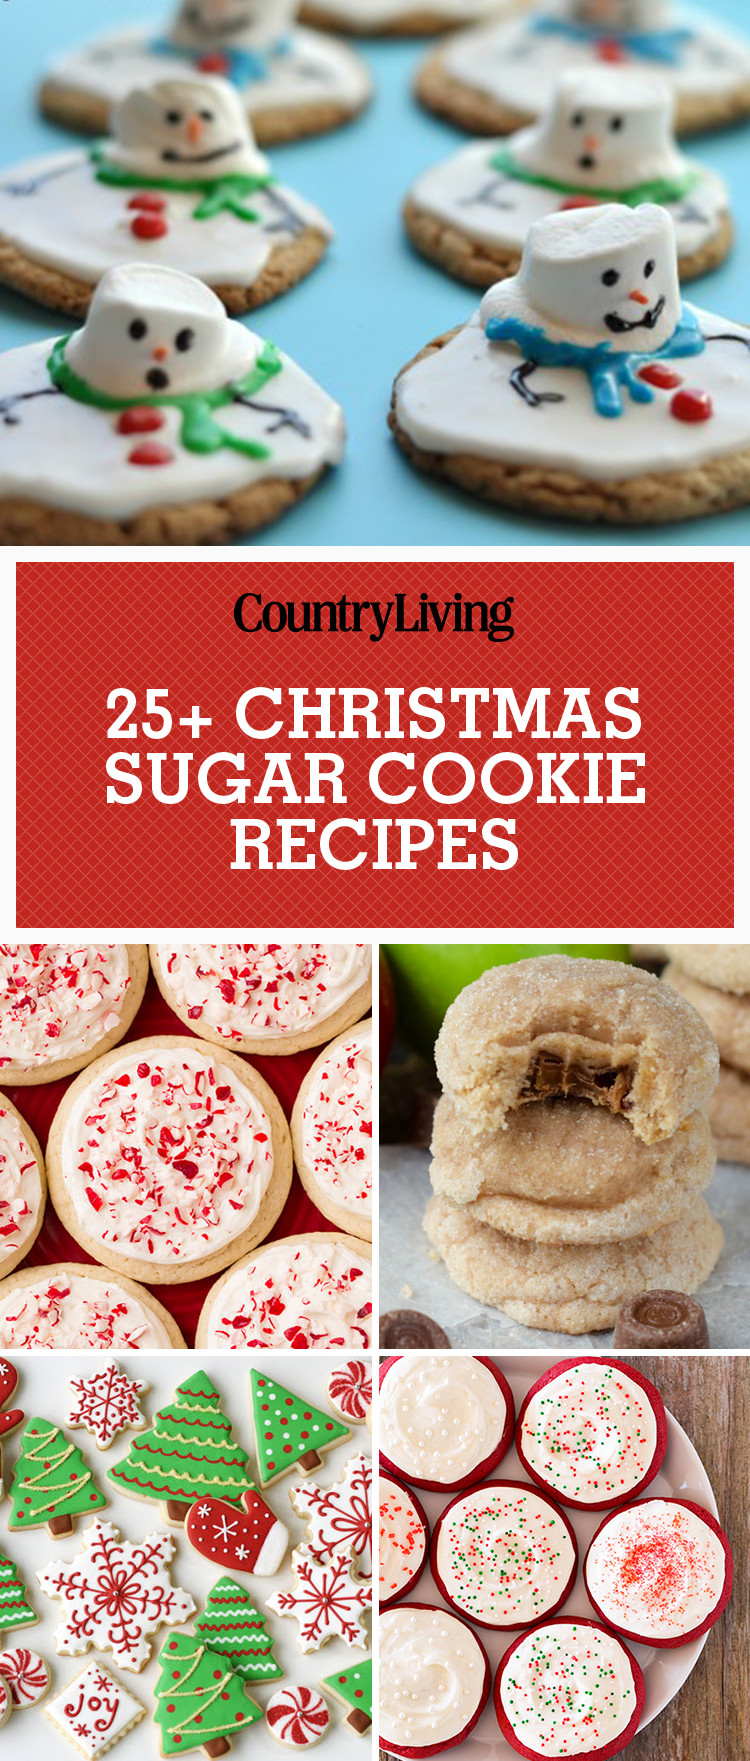 Recipe For Christmas Sugar Cookies
 25 Easy Christmas Sugar Cookies Recipes & Decorating